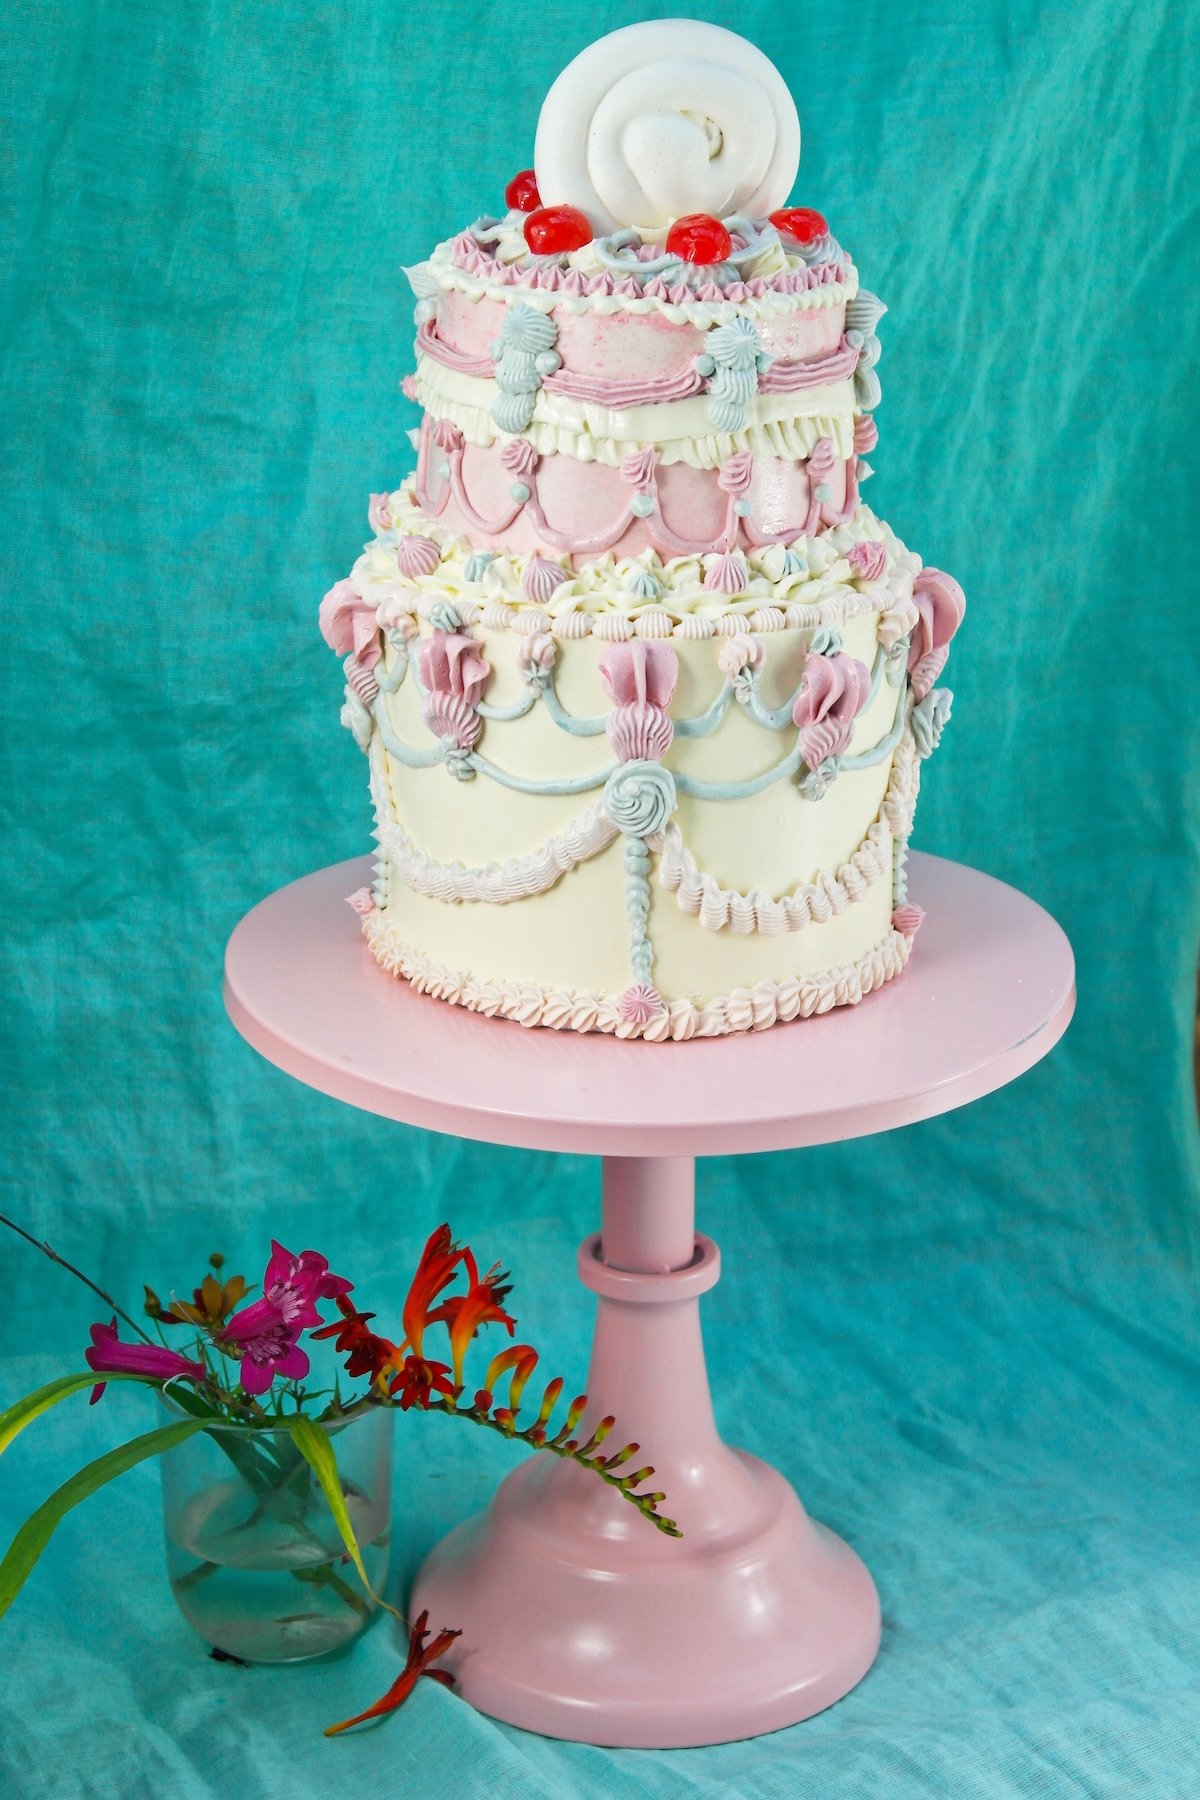 ACHE for Cake Kitschy_PinkWhite_2tier 1200x1800.jpg